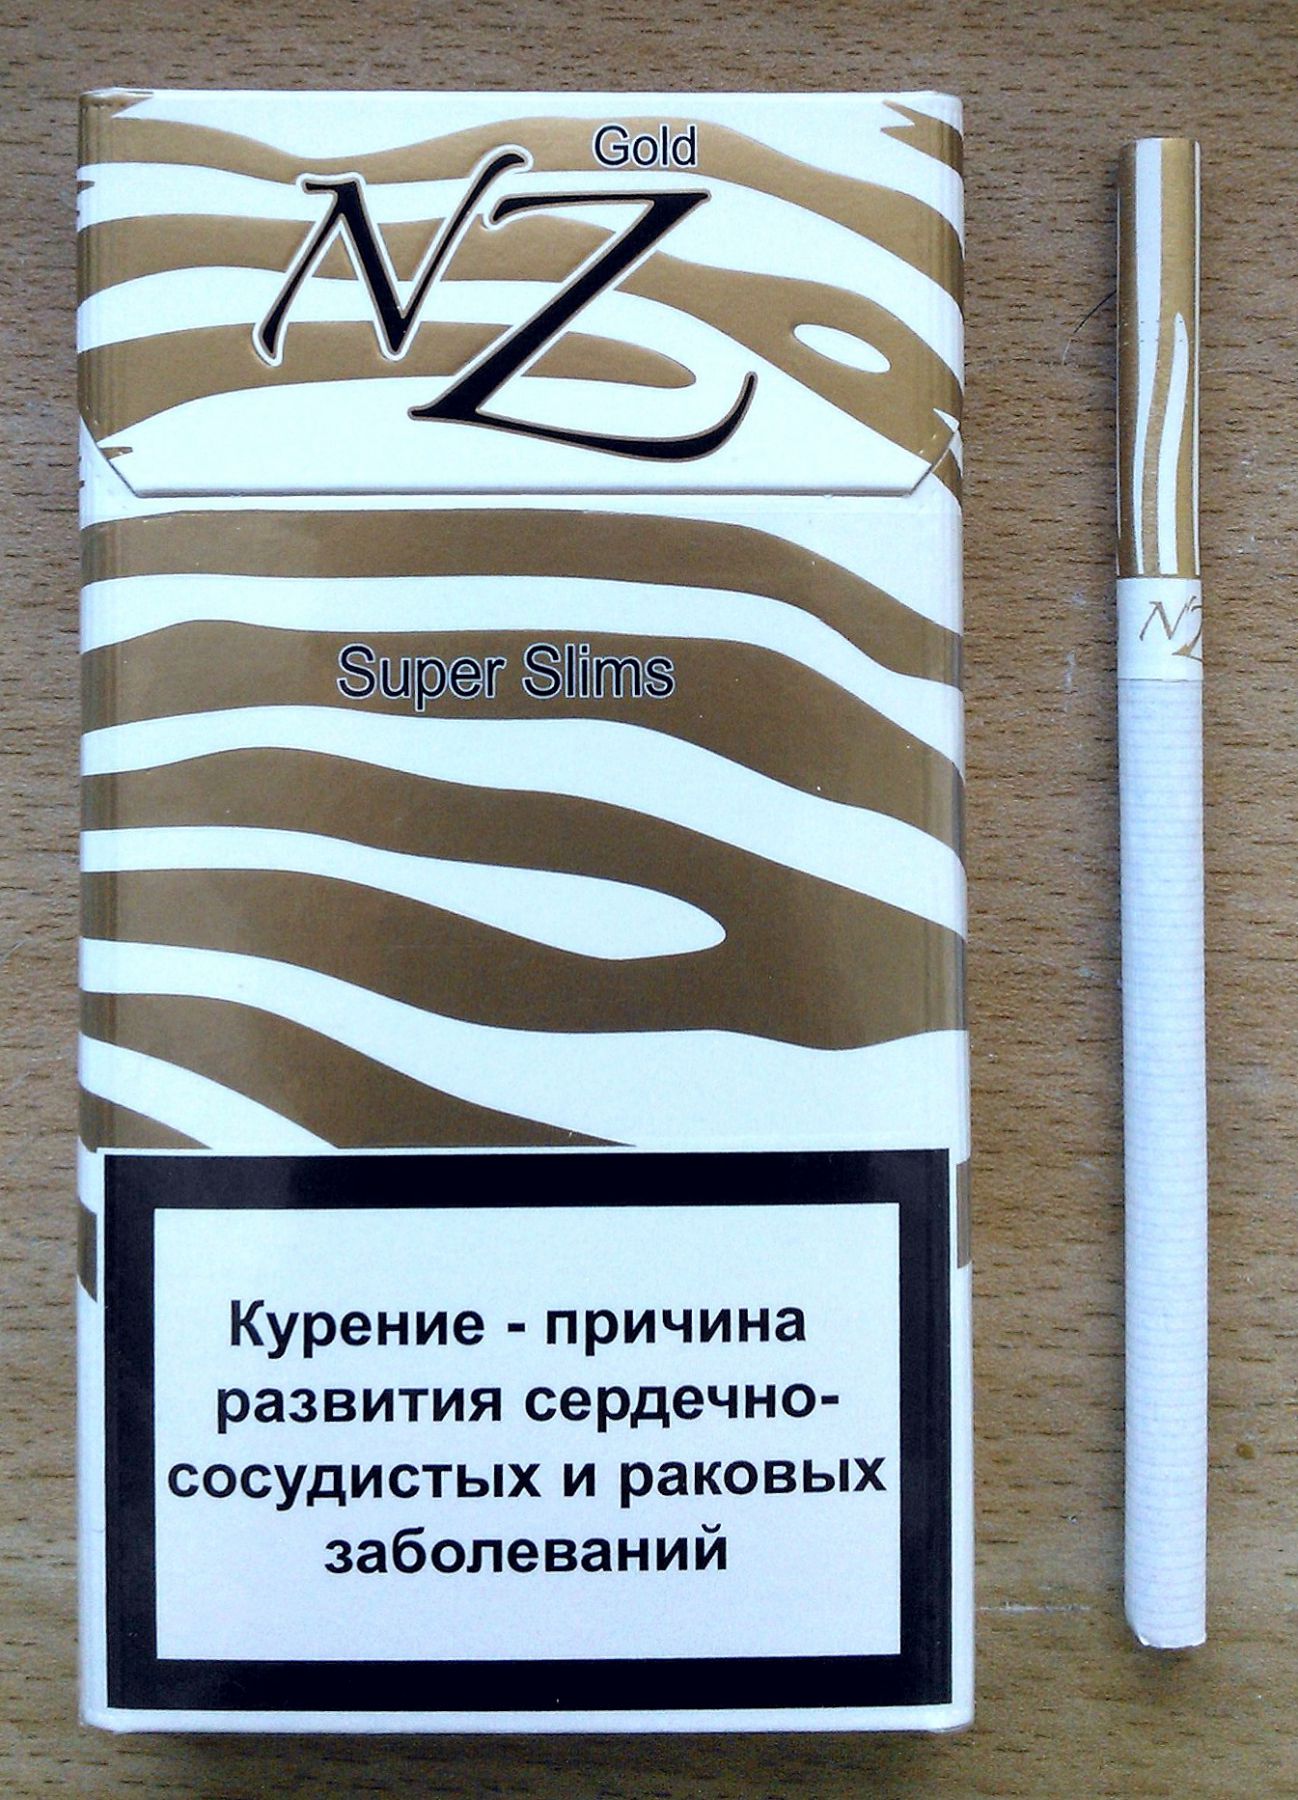 Дав компакт. Сигареты Белорусские НЗ 8 НЗ 10. НЗ сафари сигареты компакт. Сигареты nz Gold super Slims. Сигареты nz Gold супер слим.